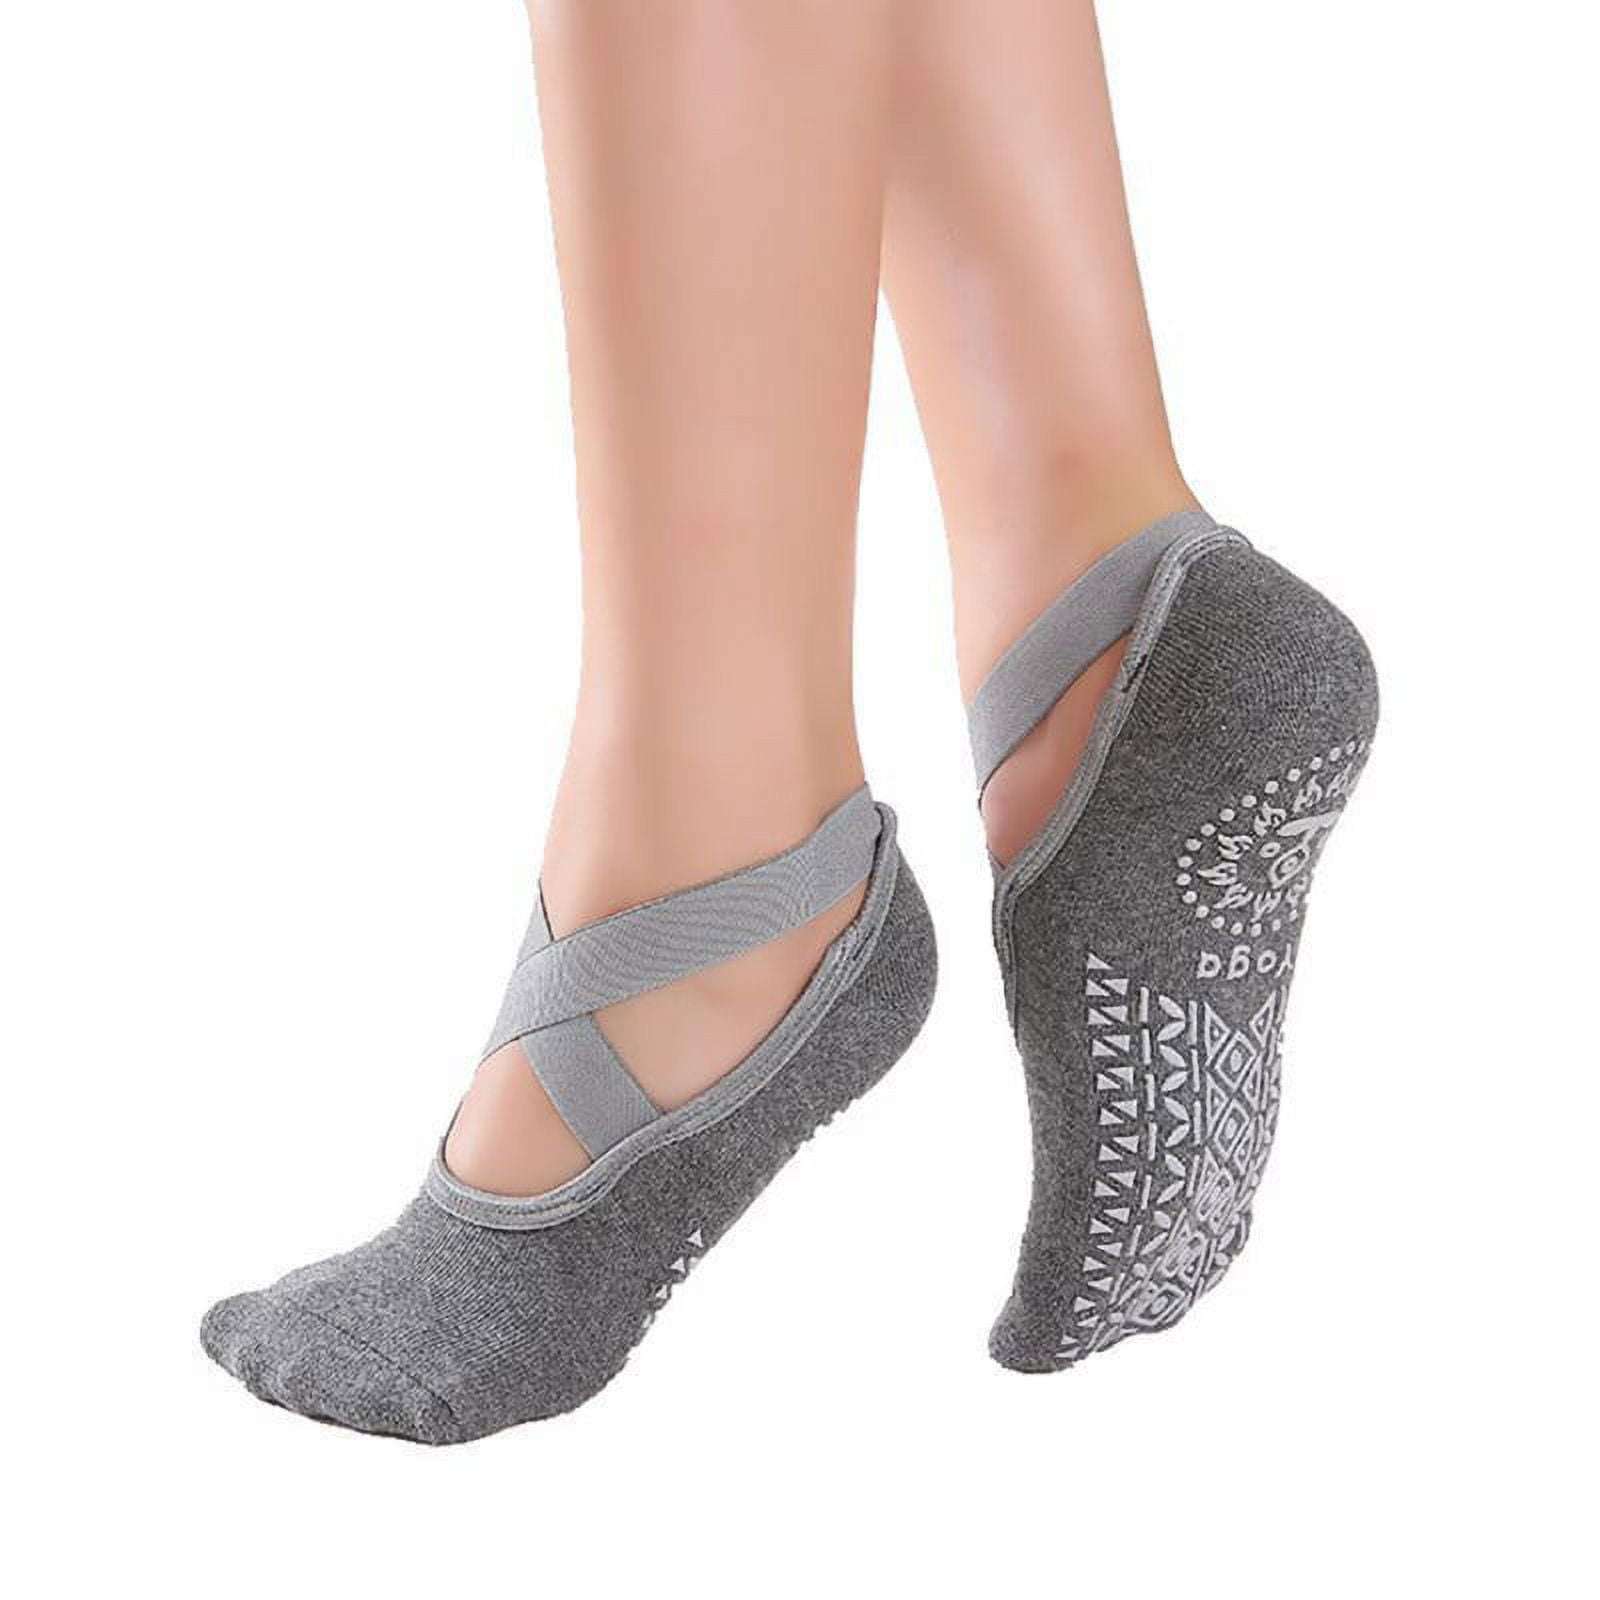 Yoga Socks for Women Non-Slip Grips & Straps, Ideal for Pilates, Pure Barre,  Ballet, Dance, Barefoot Workout 